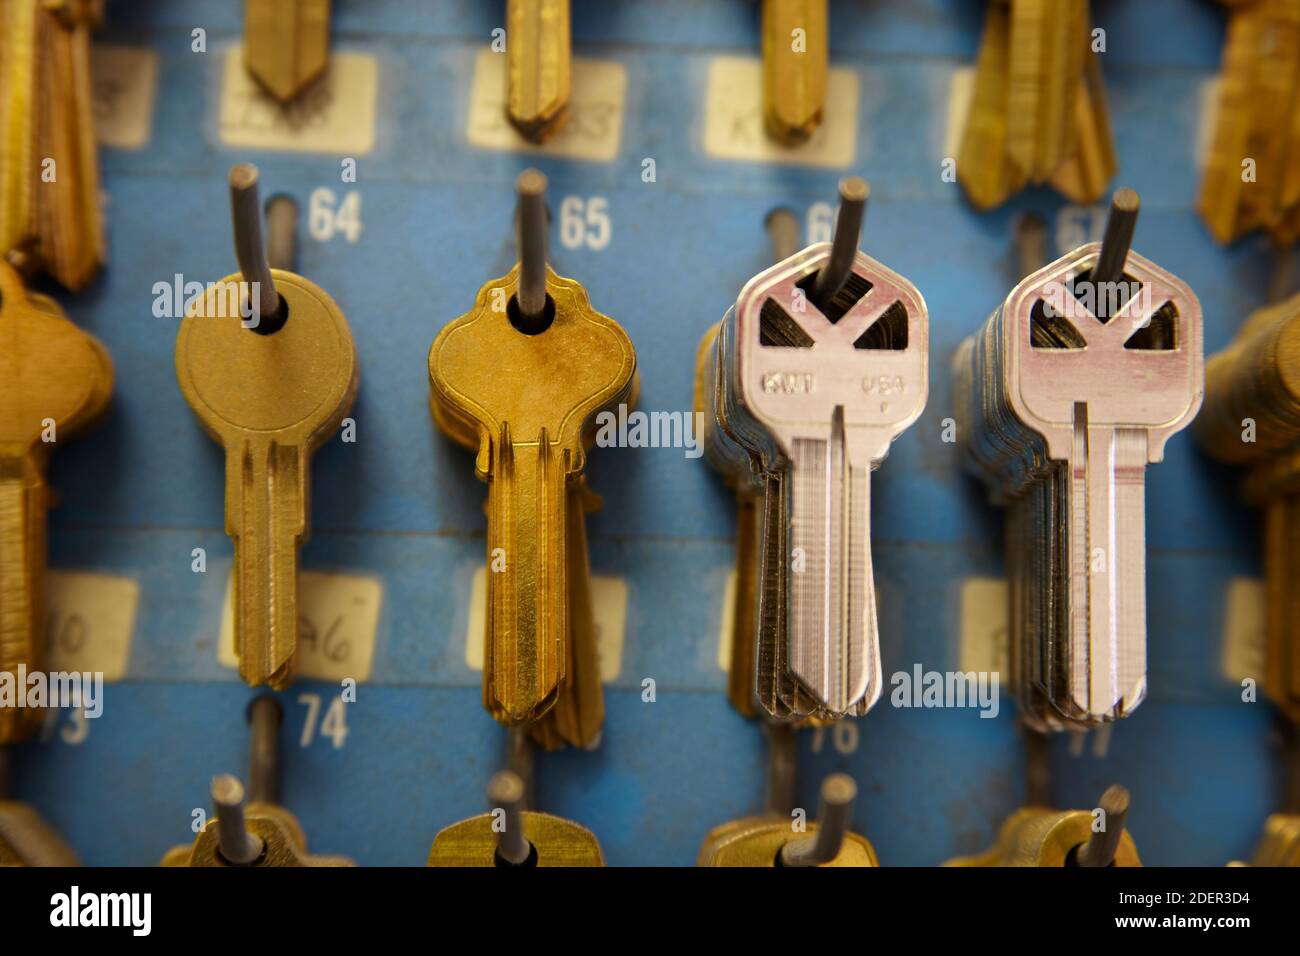 Keys hanging on board. Stock Photo